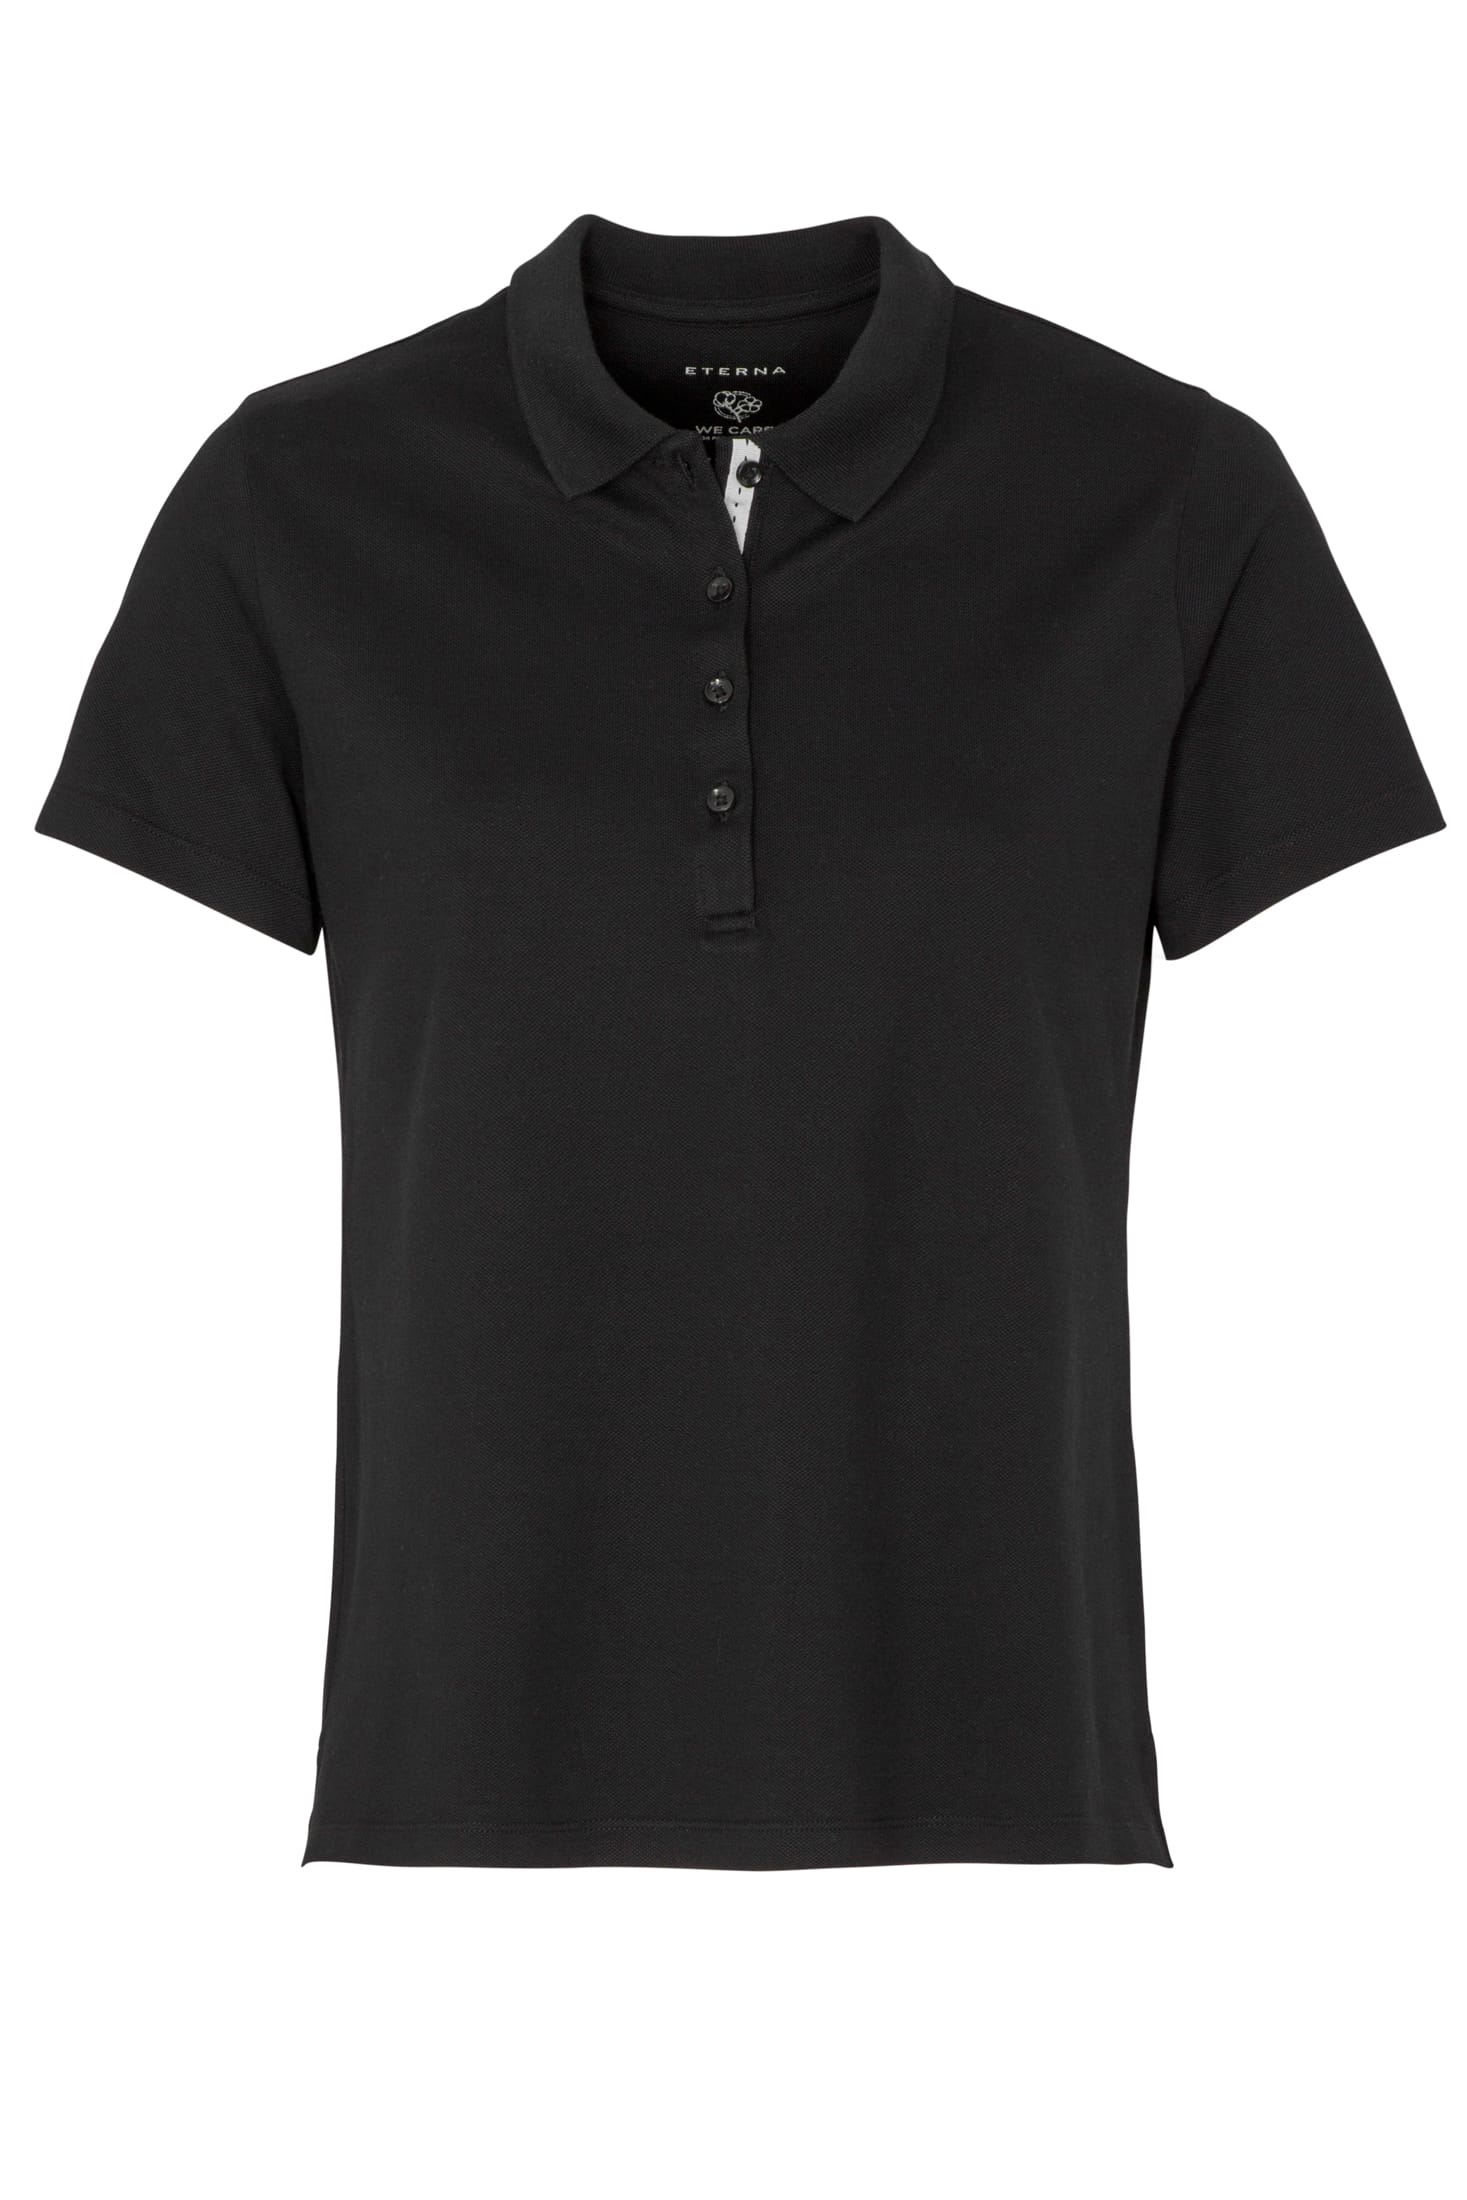 ETERNA CLASSIC FIT Poloshirt schwarz | | 5535-39-H530 | Poloshirts Jeans-Manufaktur Bekleidung pique Eterna Damen 